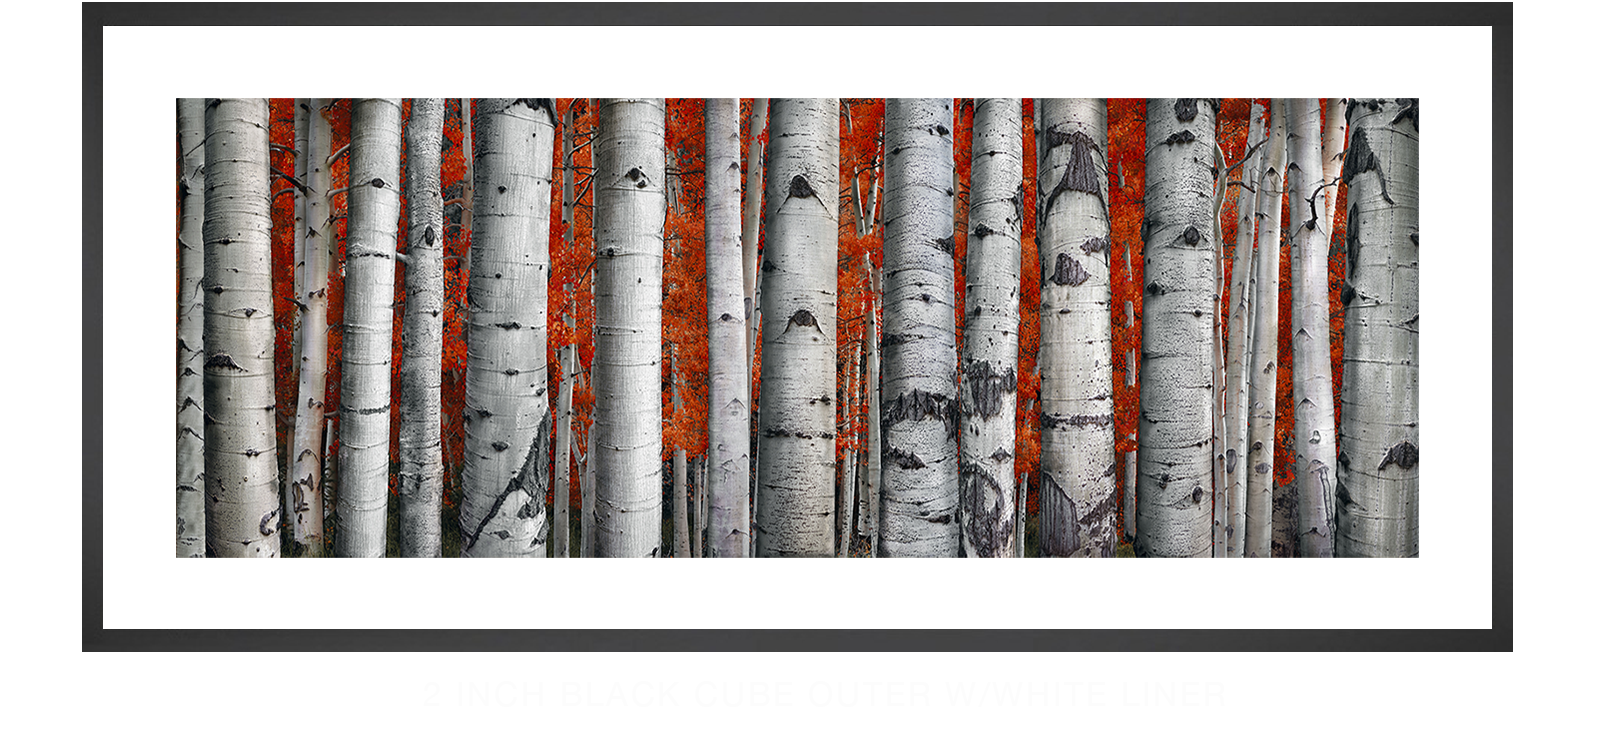 9ASPEN 2 Inch Black Cube Outer w_Wht Liner T